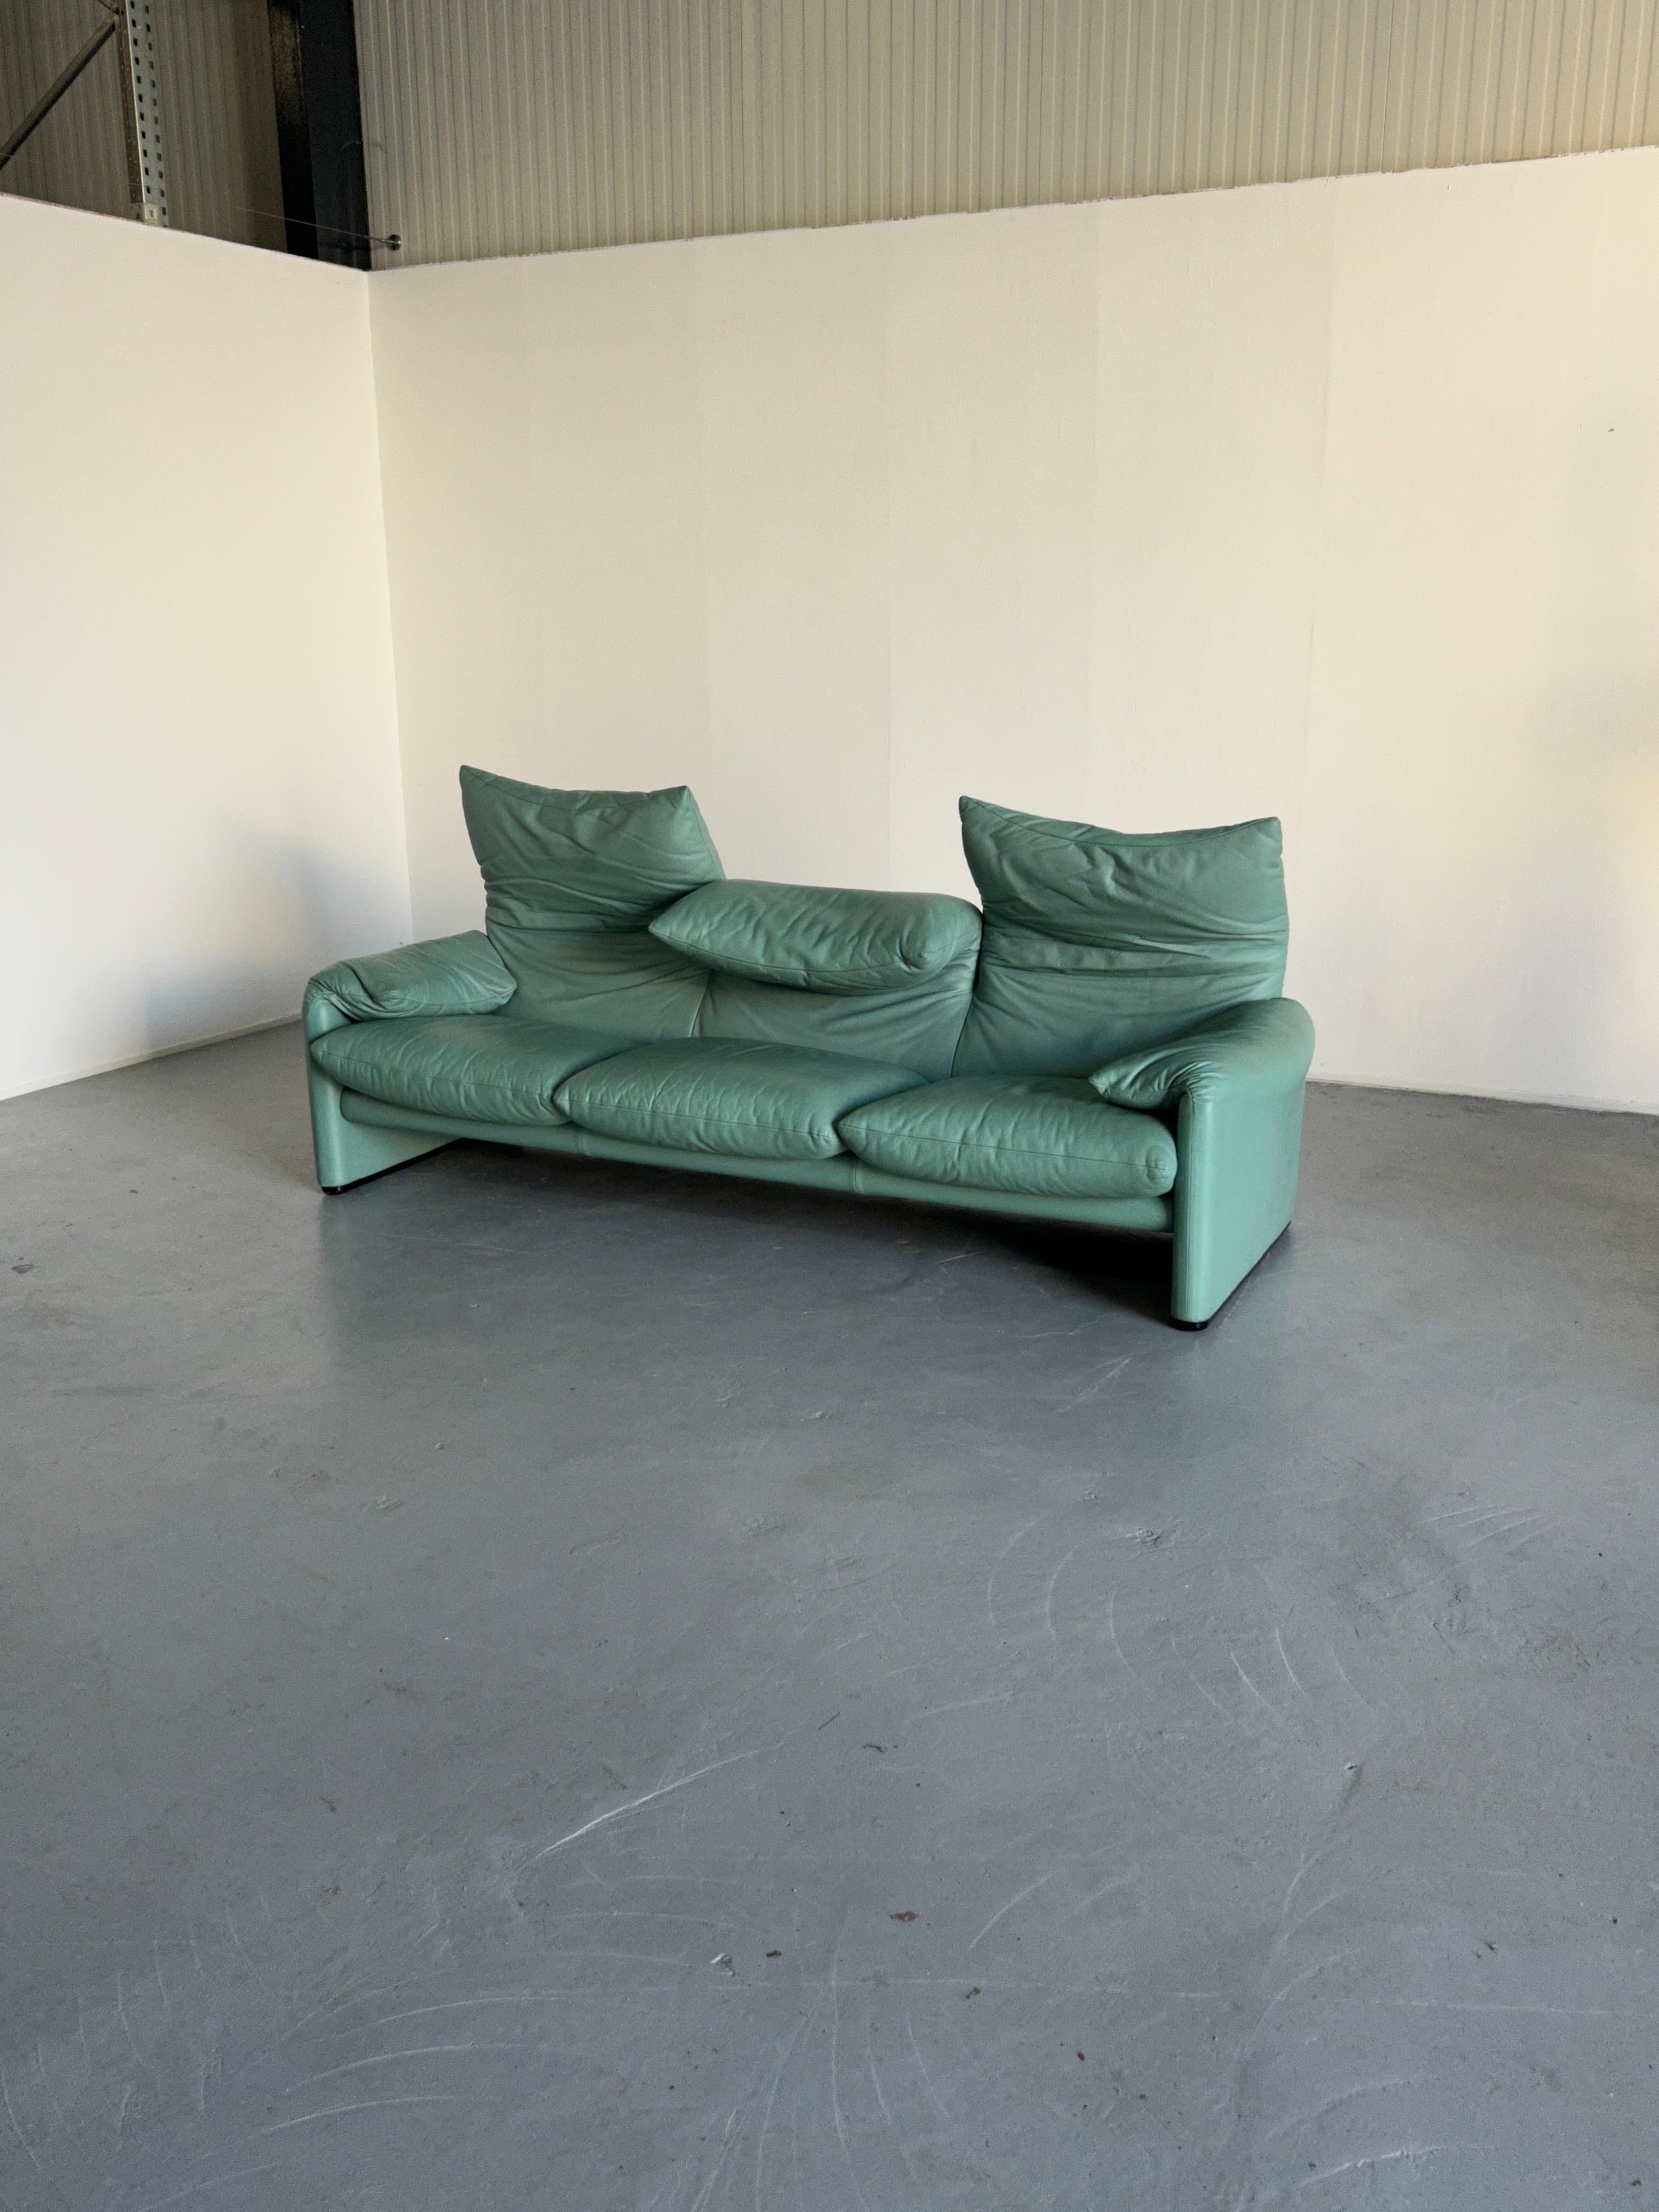 Late 20th Century  Vico Magistretti 'Maralunga' Mint Green Leather Sofa for Cassina, 1990s Italy